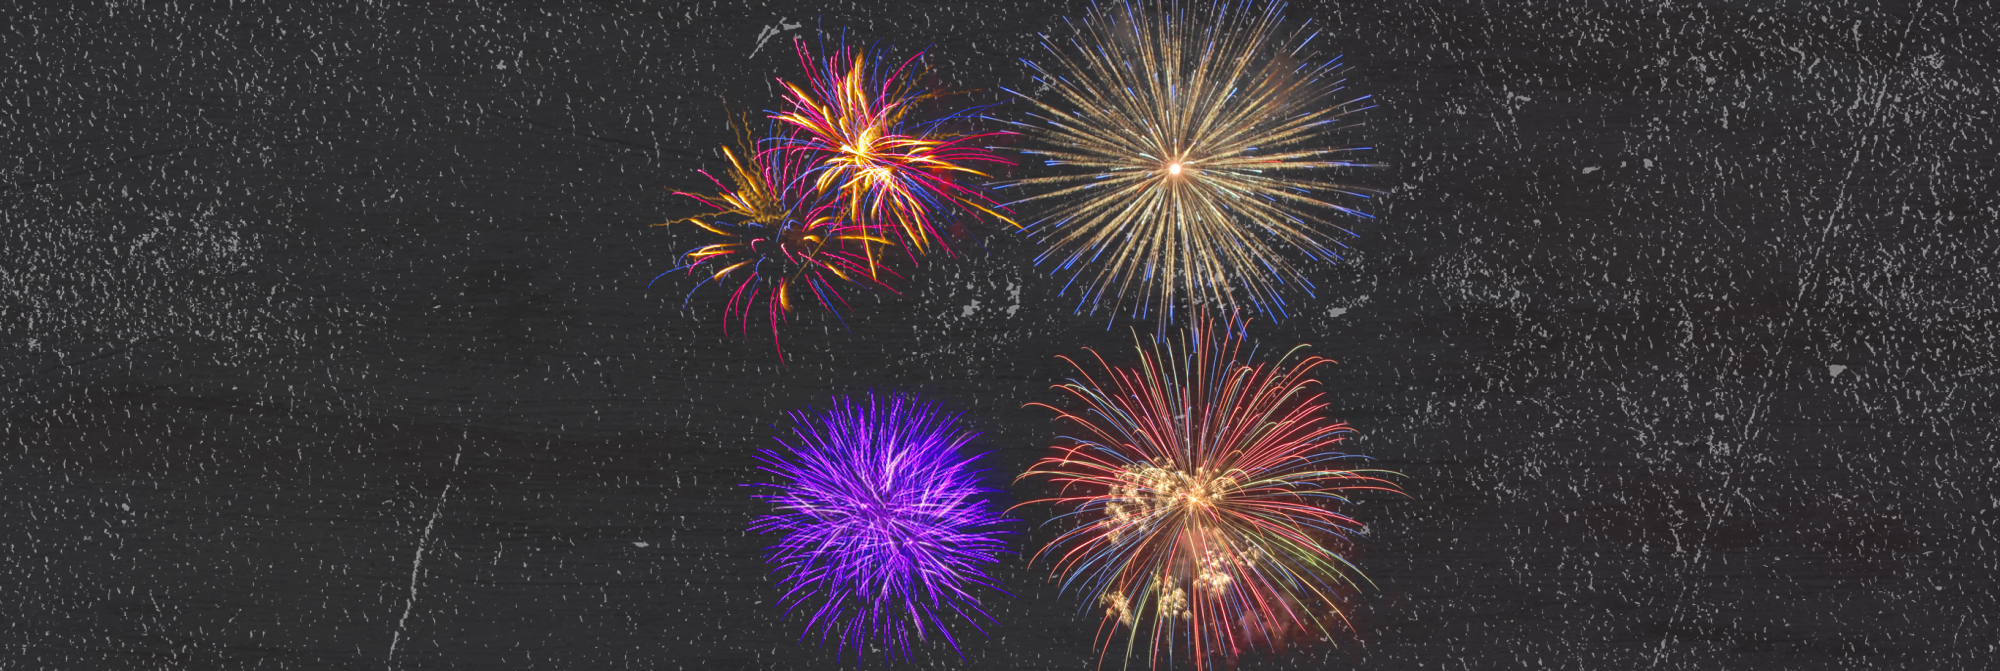 Alexander County’s Independence Celebration With Concert & Fireworks